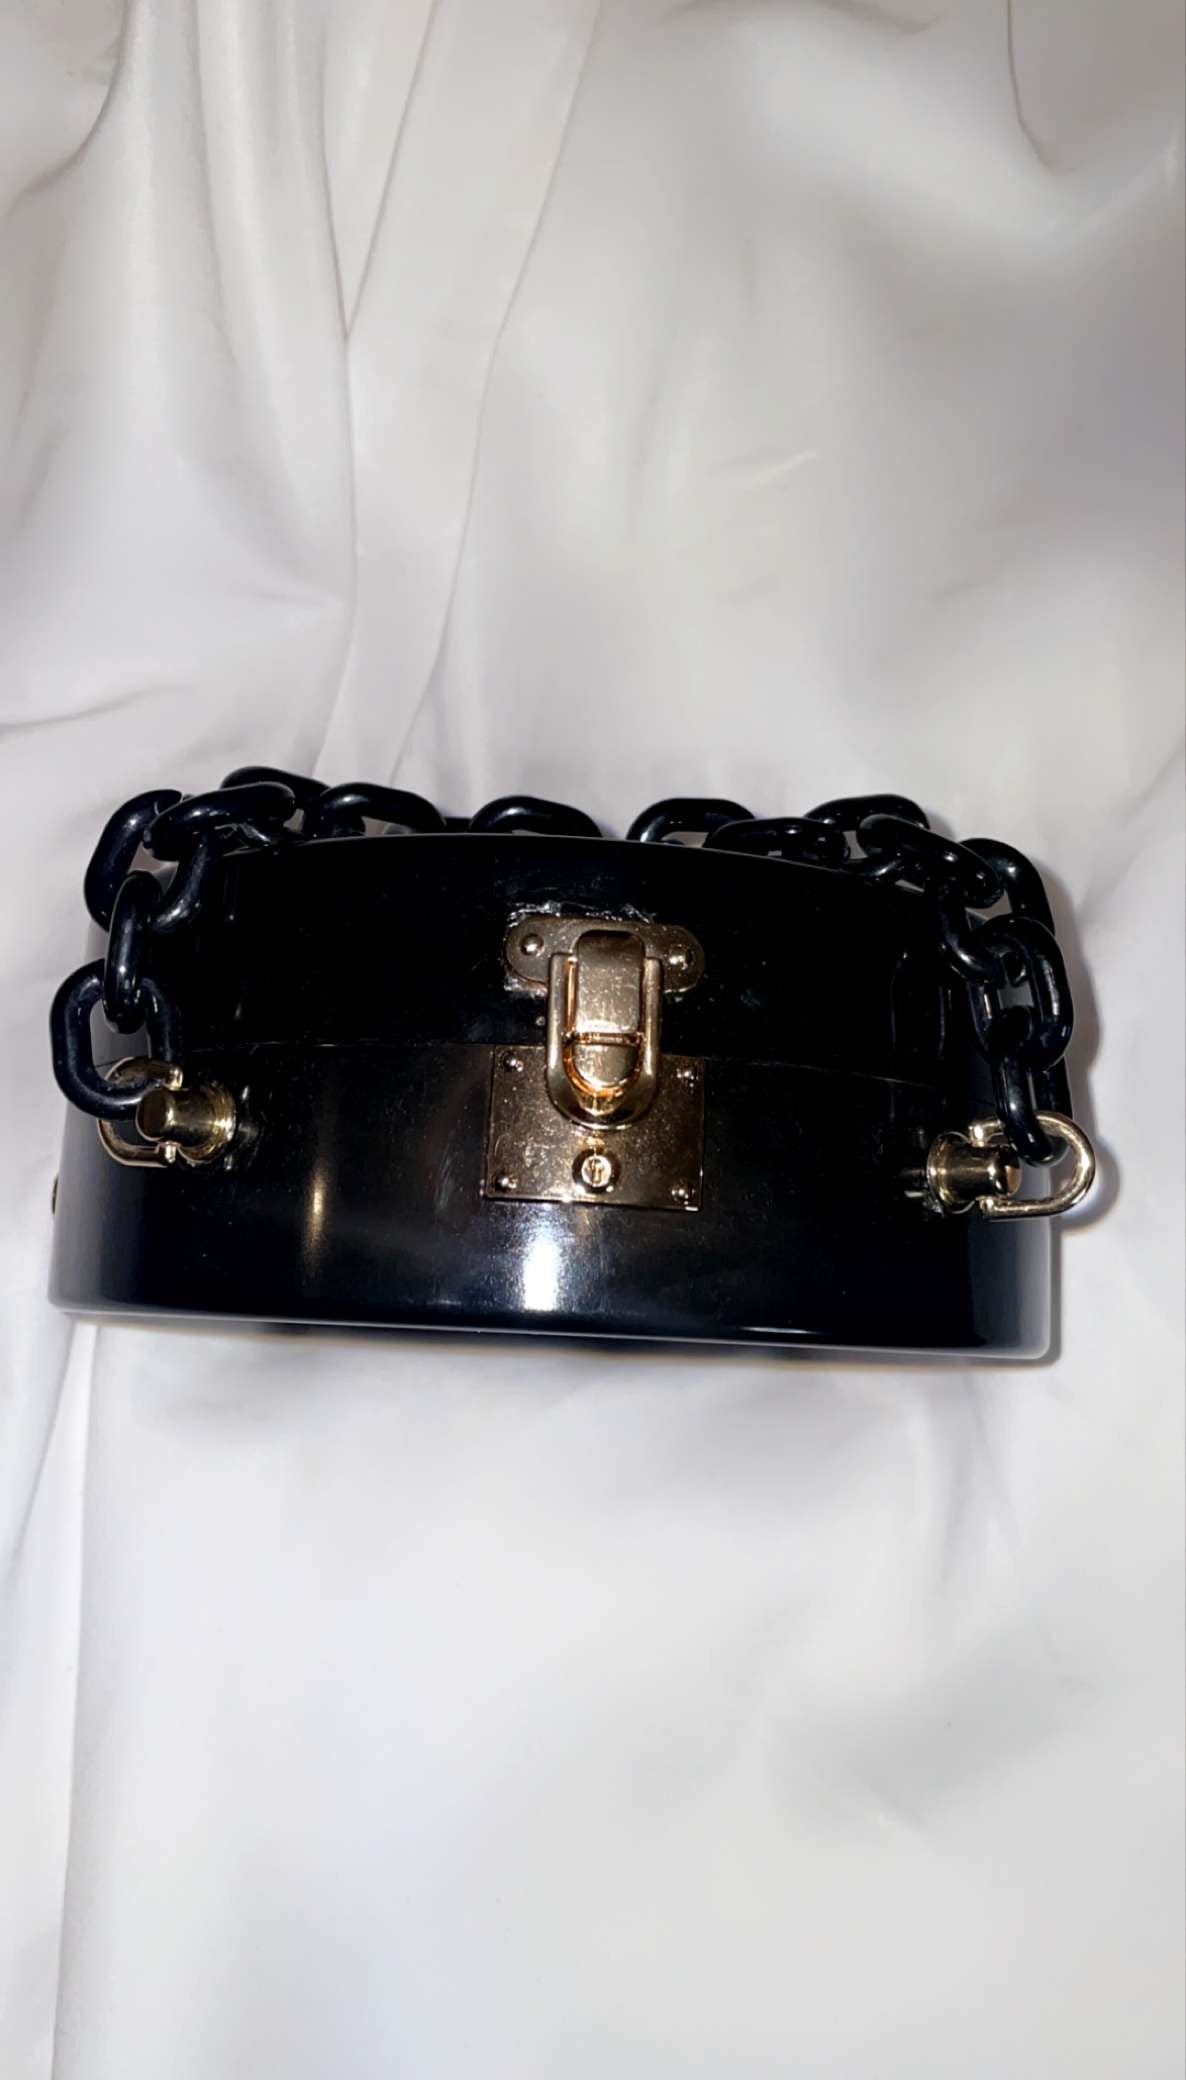 Hard Round Fashion Handbag with Short Chain